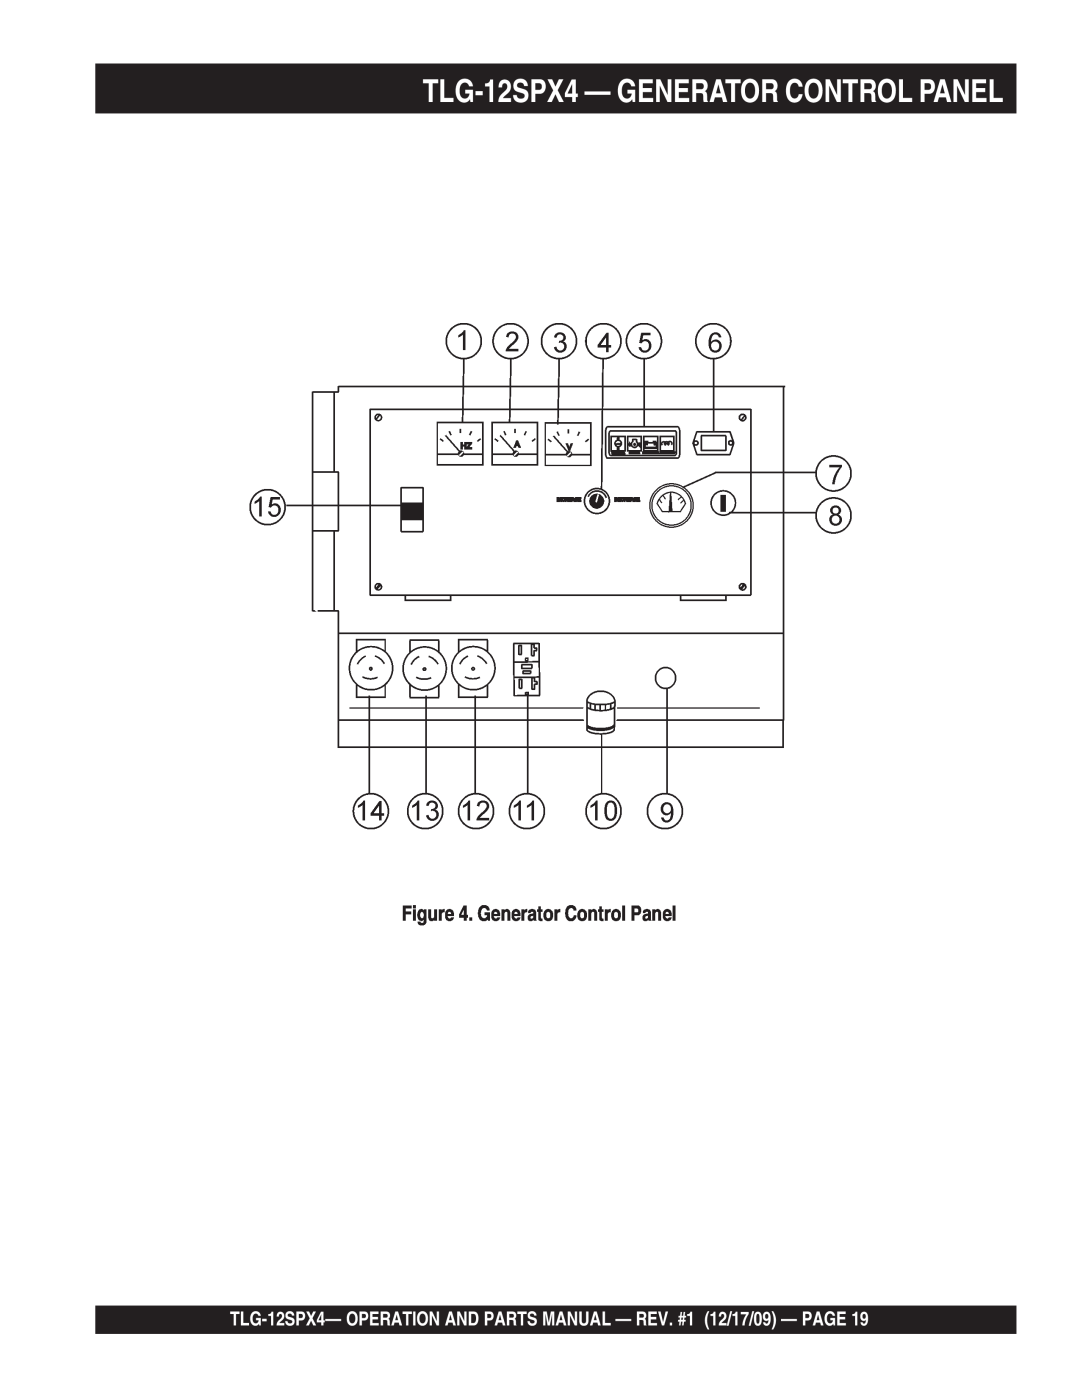 Multiquip operation manual TLG-12SPX4- GENERATOR CONTROL PANEL, Generator Control Panel 